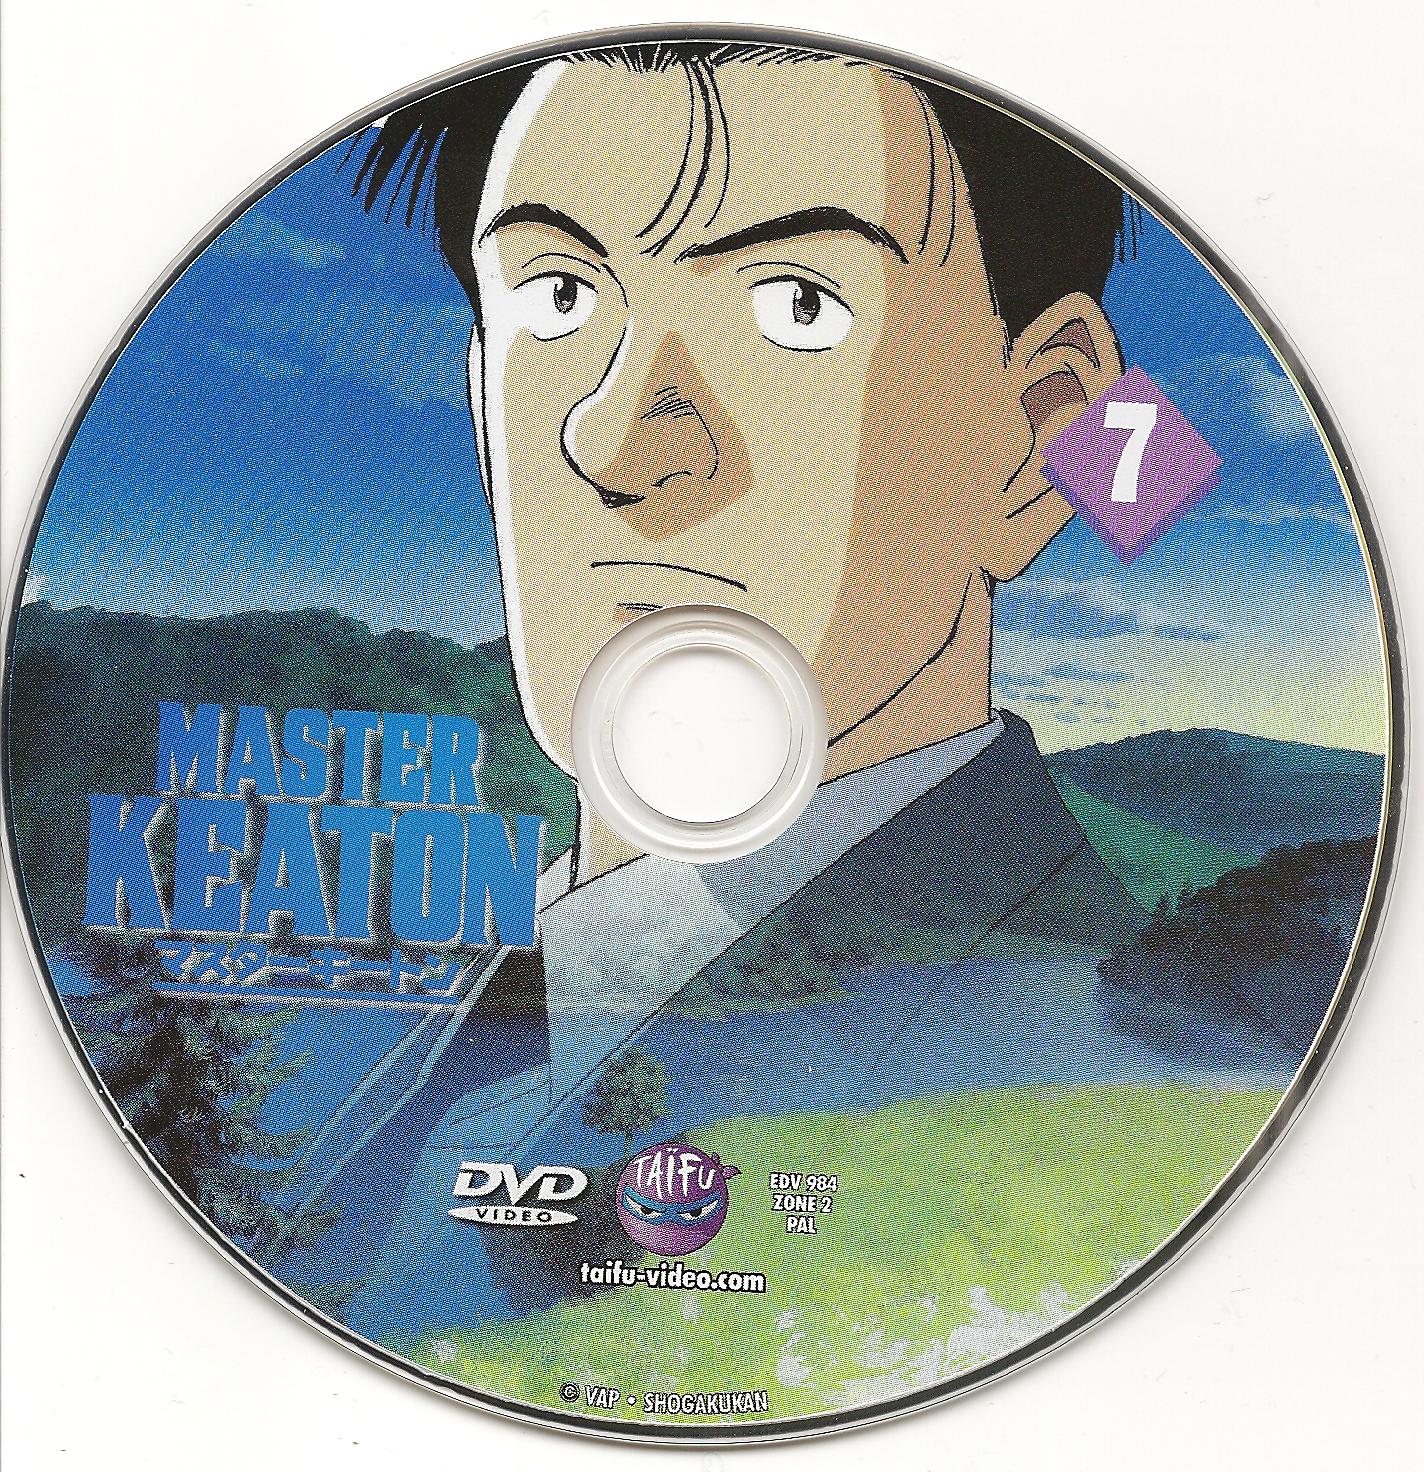 Master Keaton vol 07